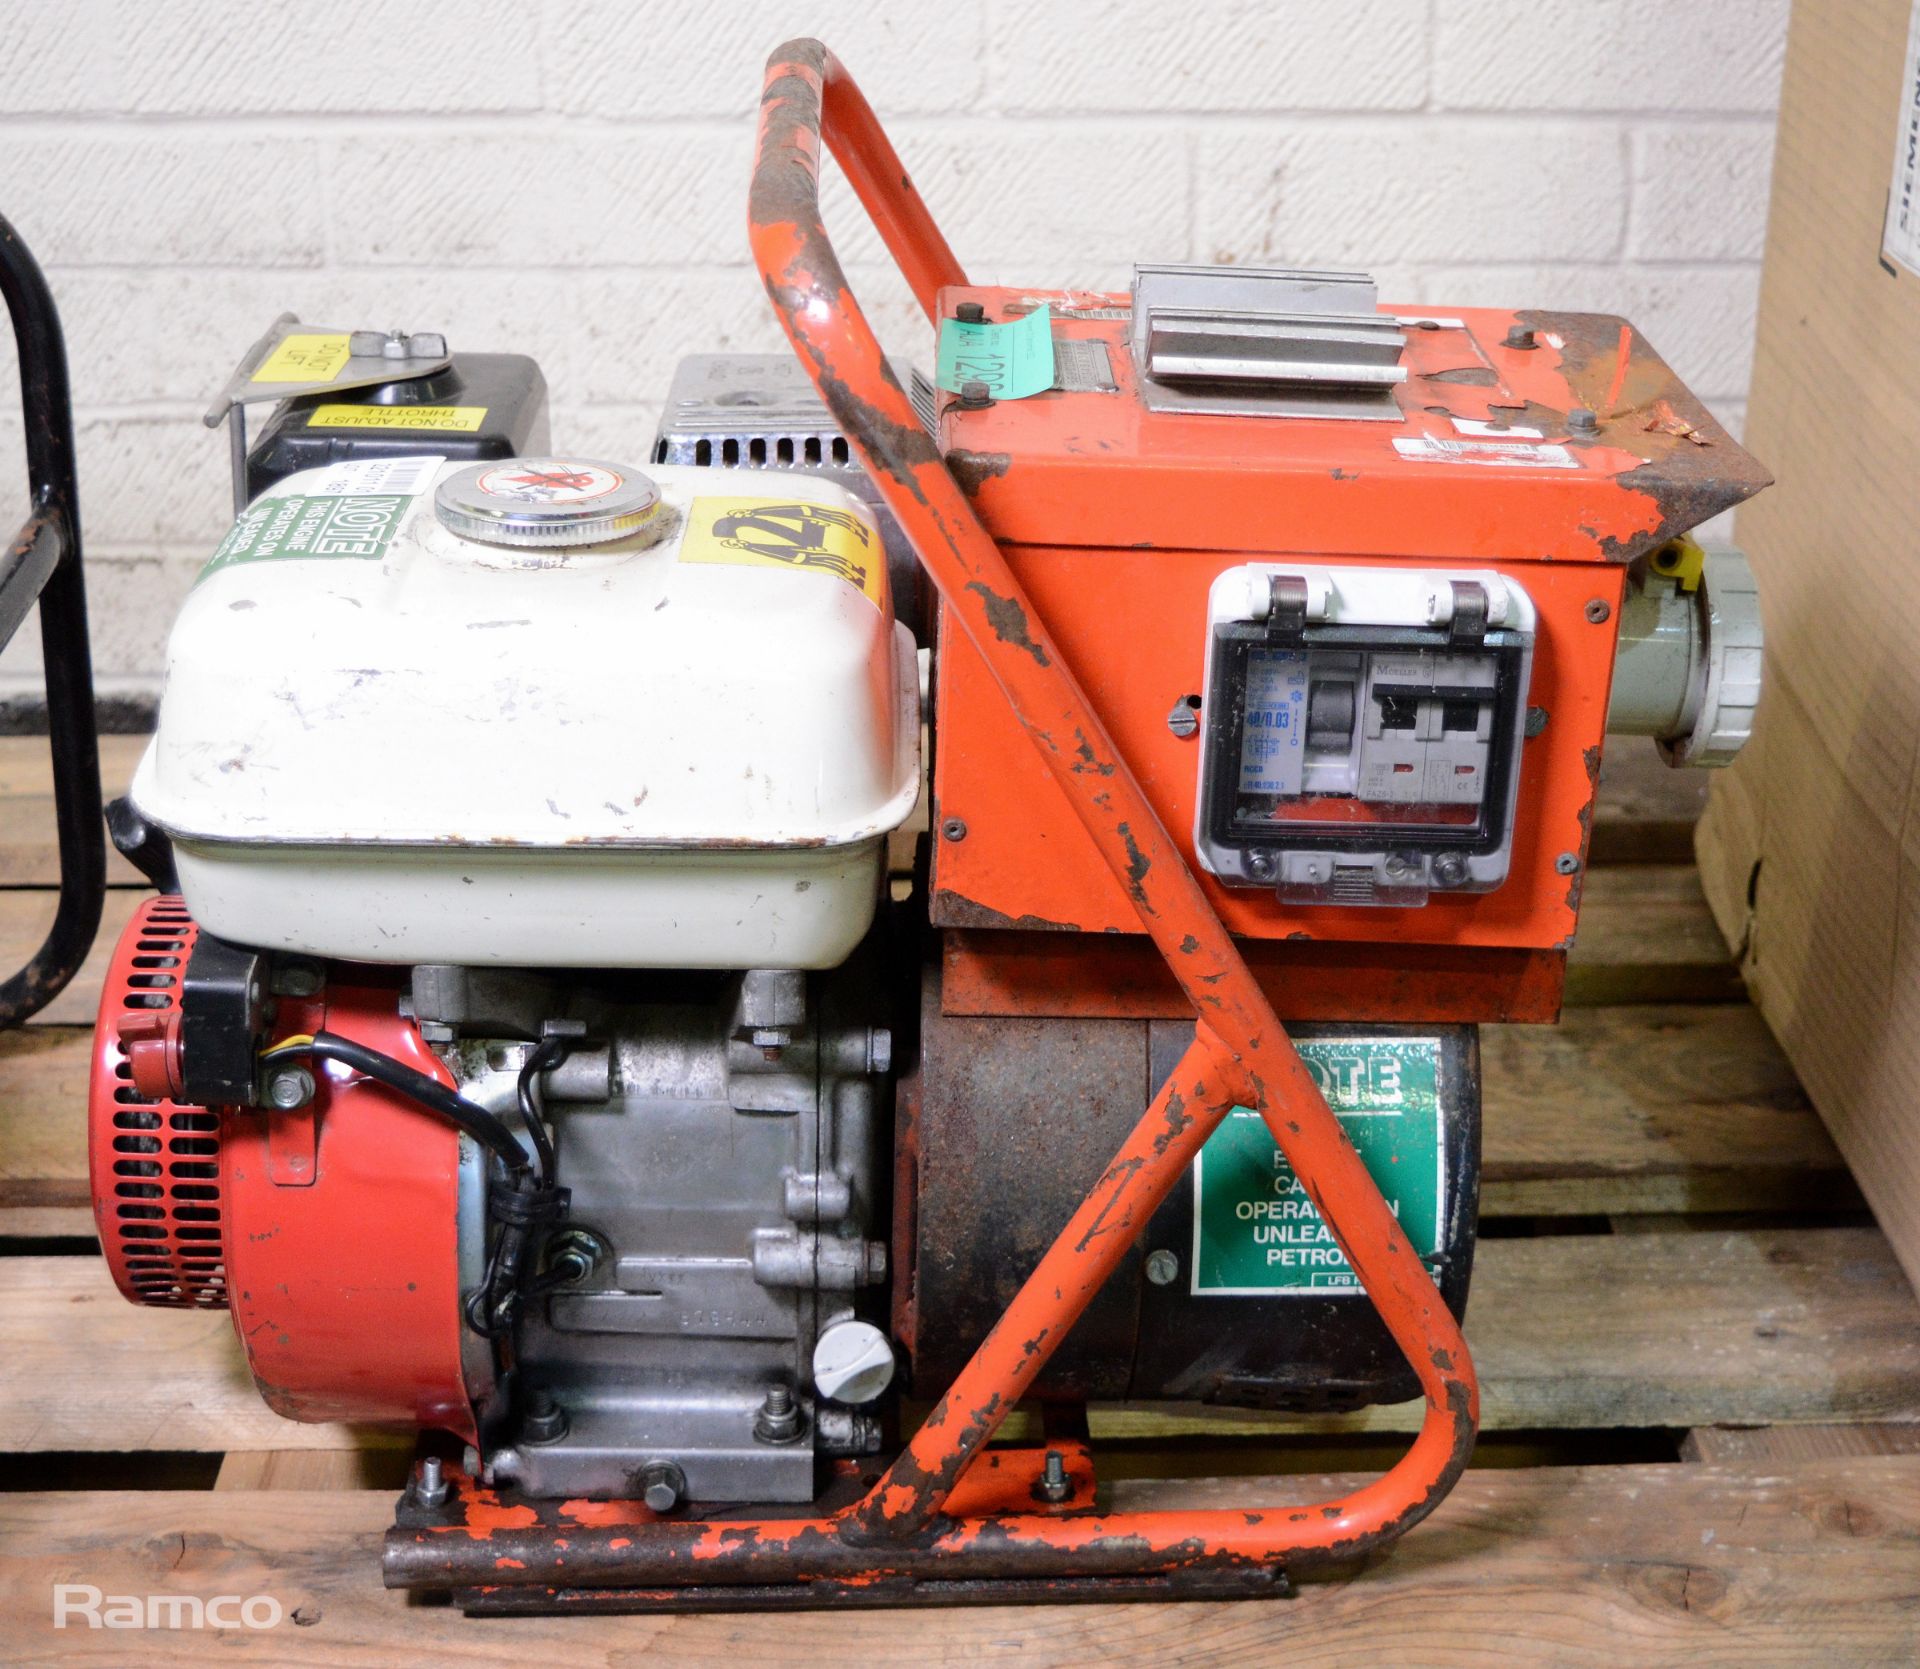 Honda petrol driven generator - 1.5KVA - 110V 50hz 13.6amps - Image 2 of 6